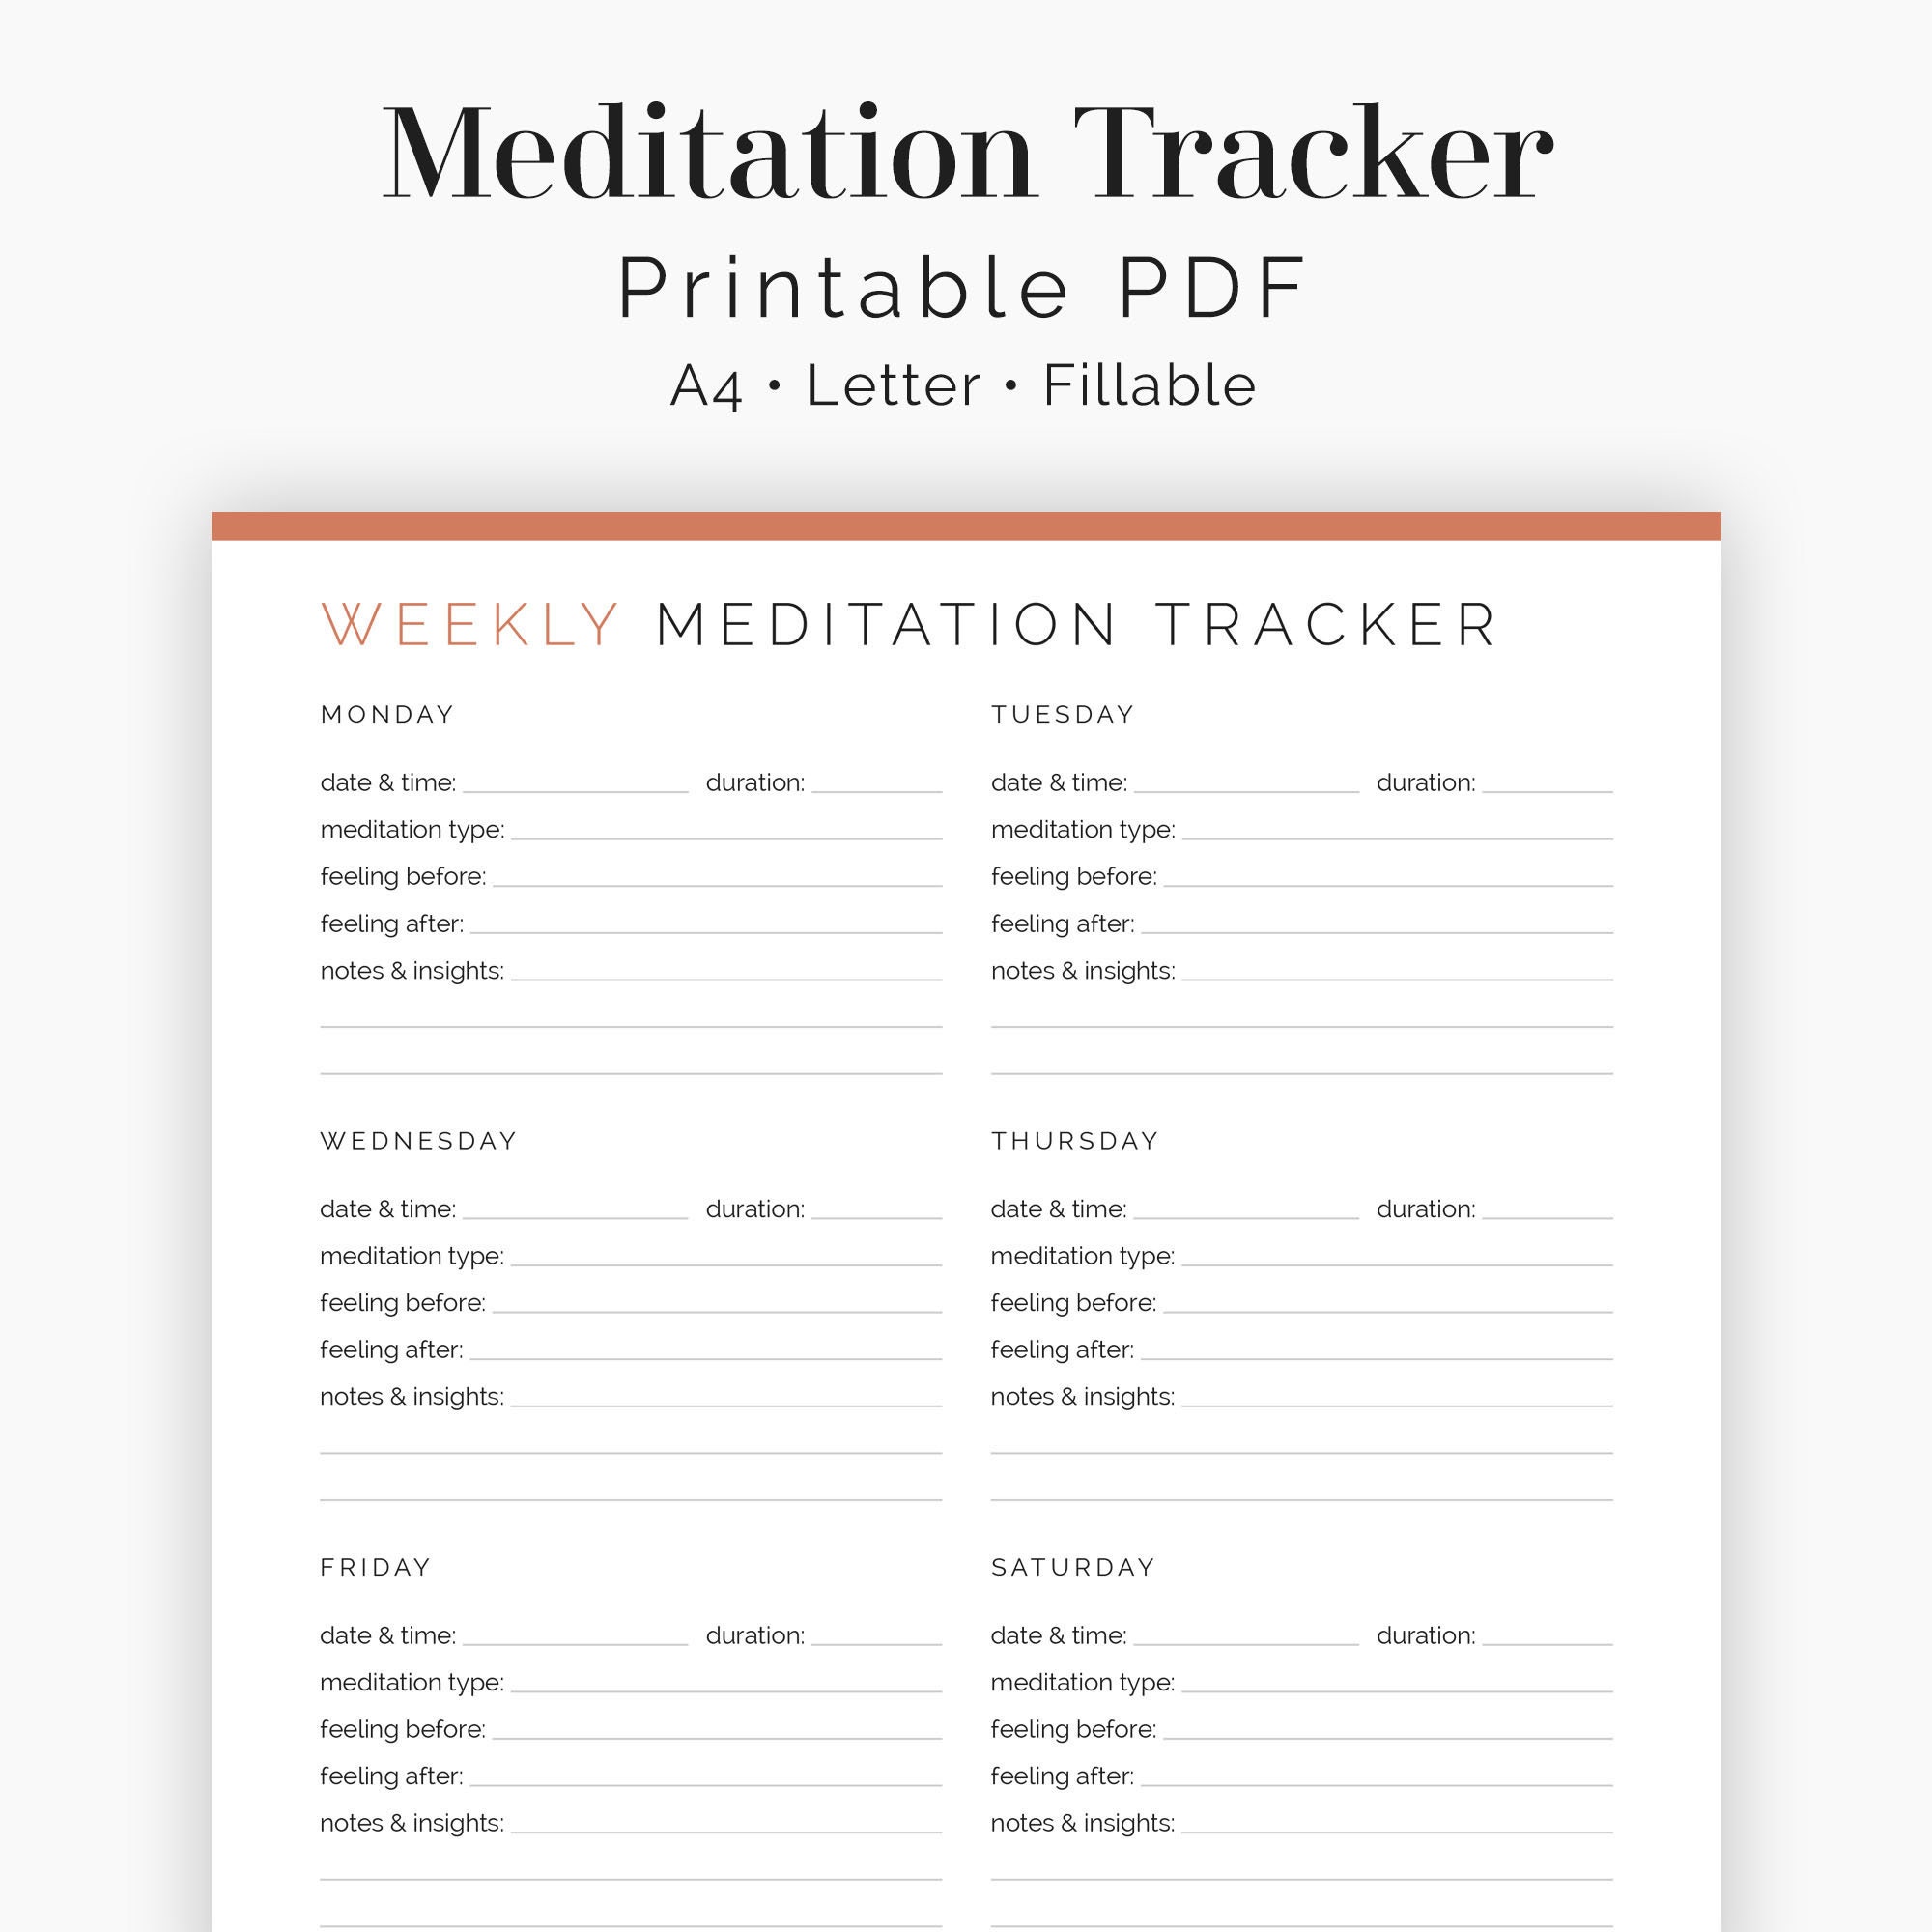 Meditation pdf download revit student free